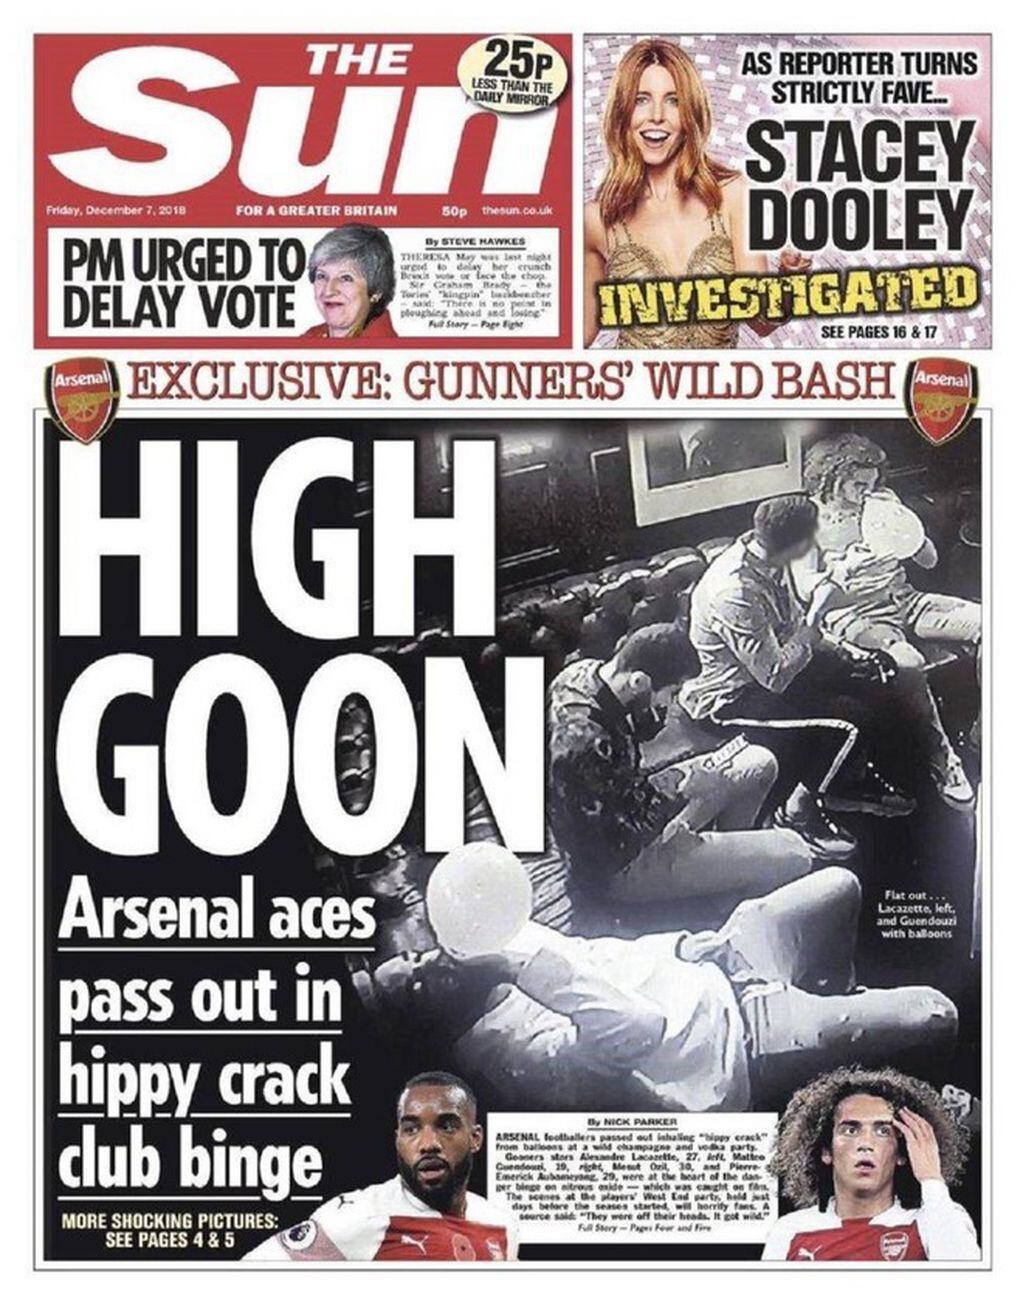 Jugadores del Arsenal consumiendo "hippy crack". (The Sun).